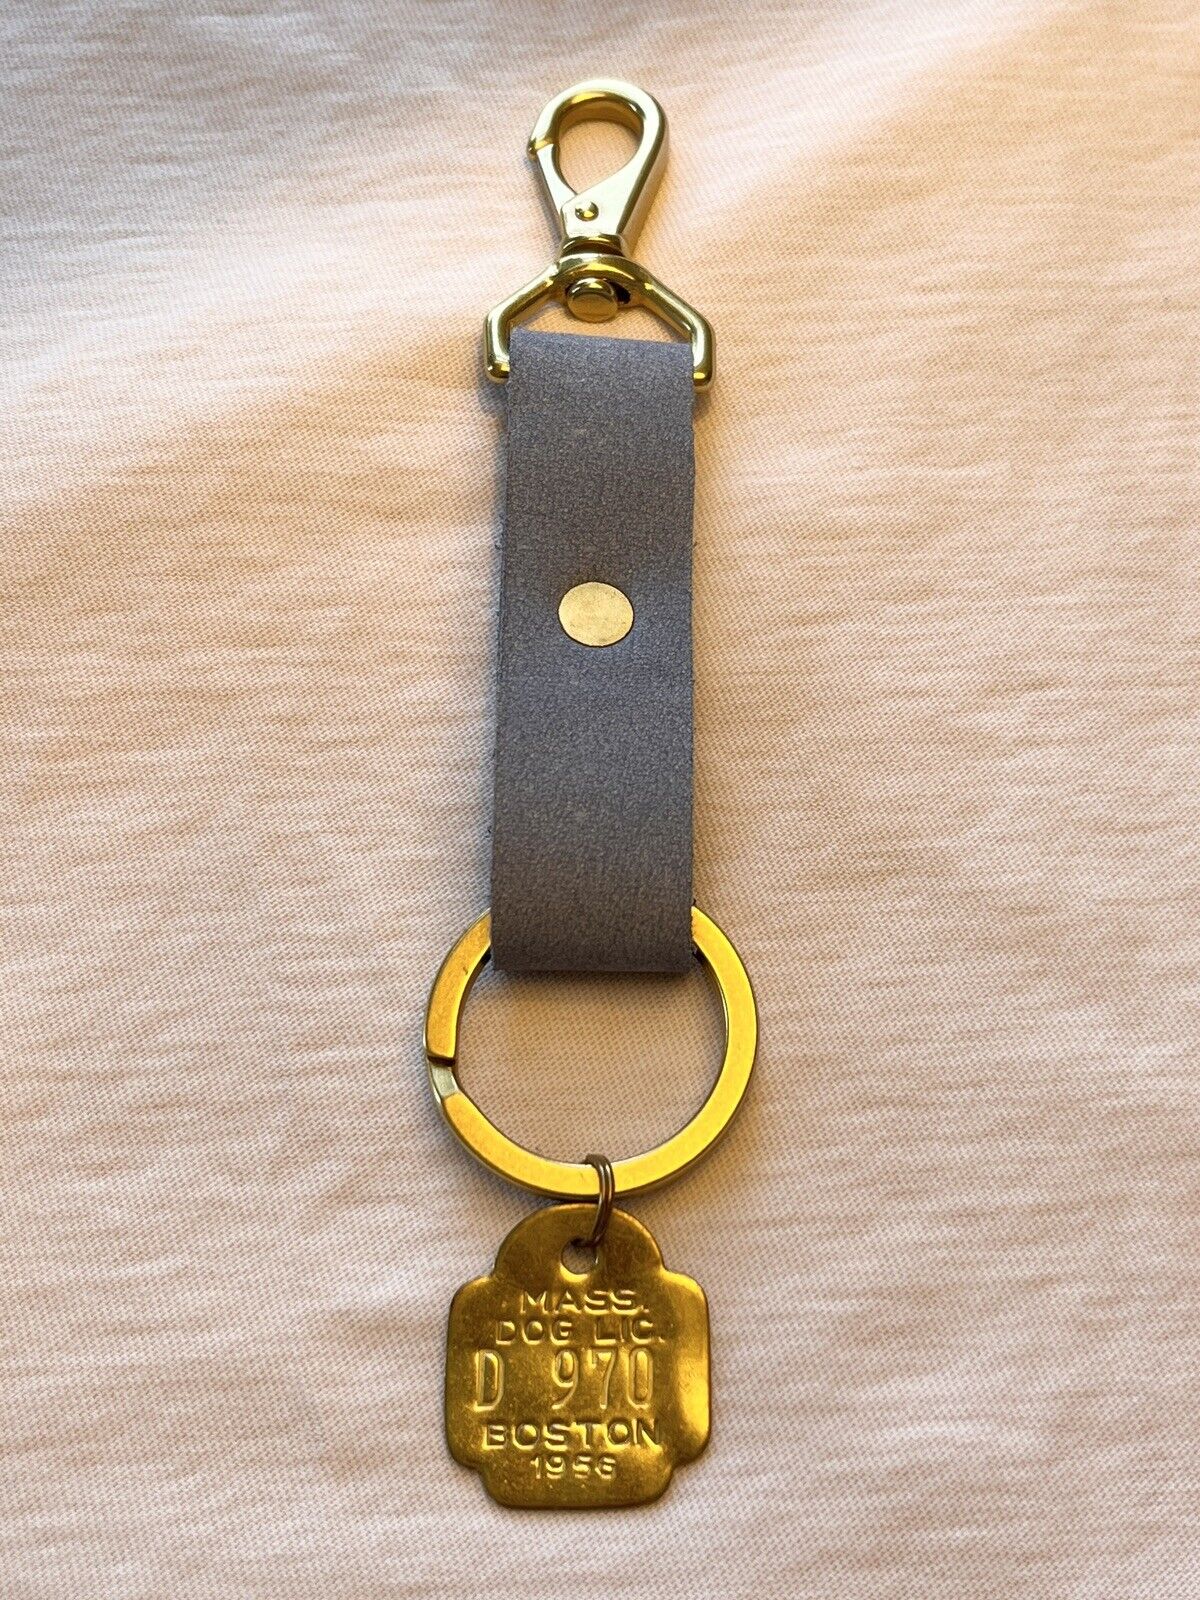 Vintage Boston Dog Tag Keychain - PLEASE READ DESCRIPTION & LISTING DETAILS